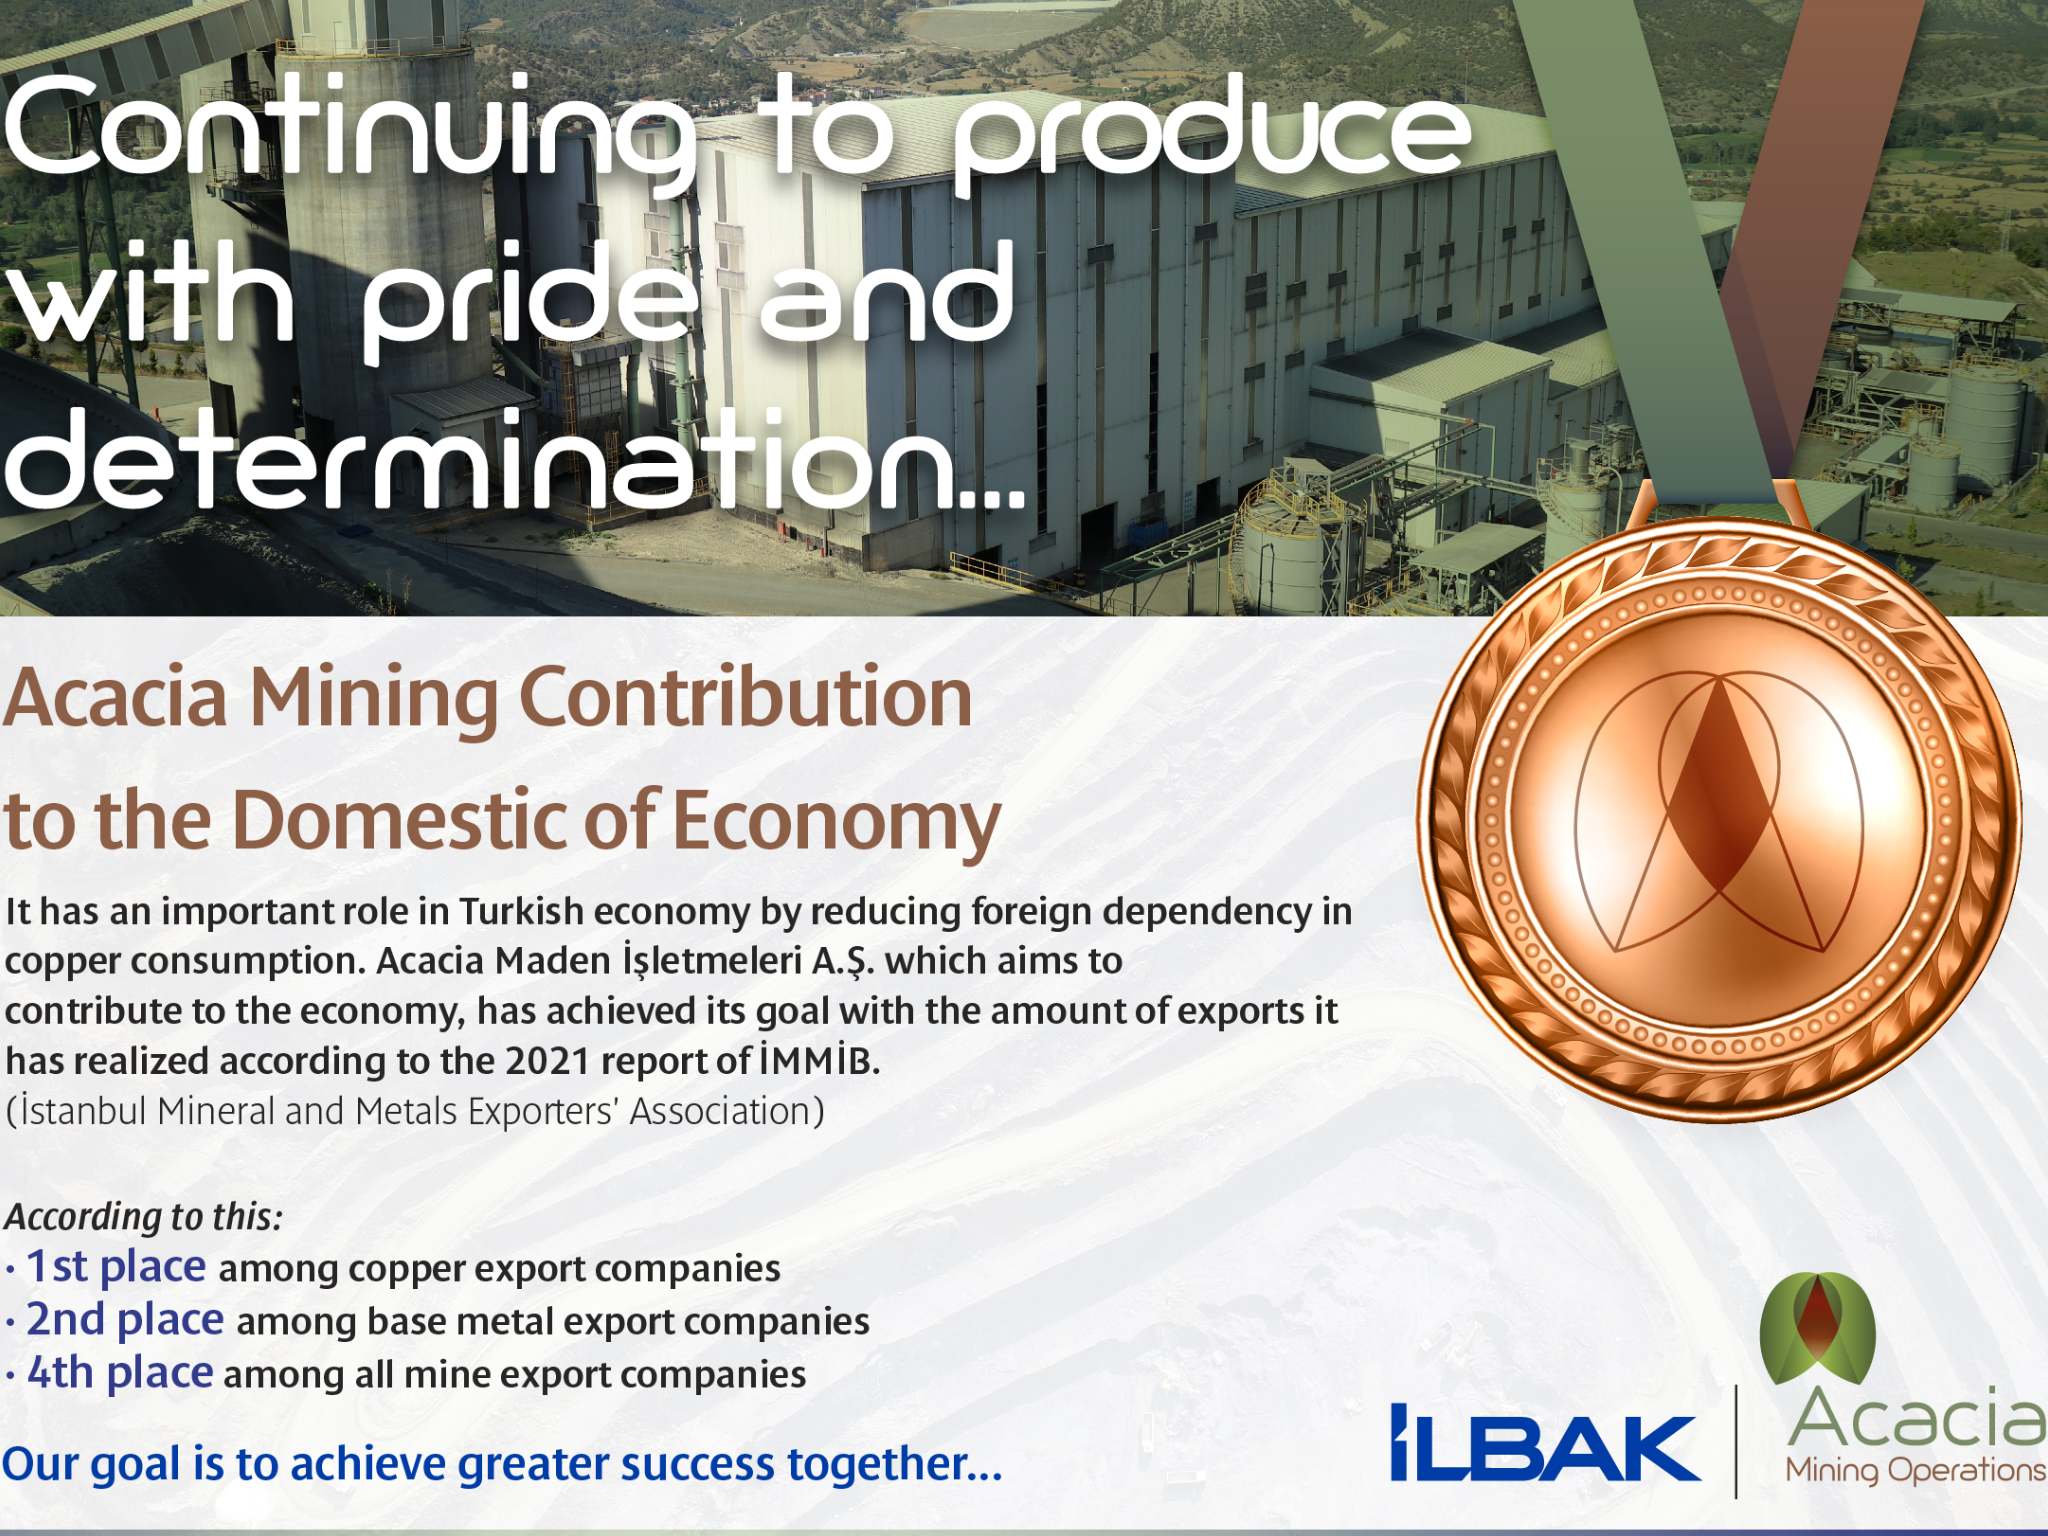 Contribution Of Acacia Mining Enterprises to the Domestic Economy